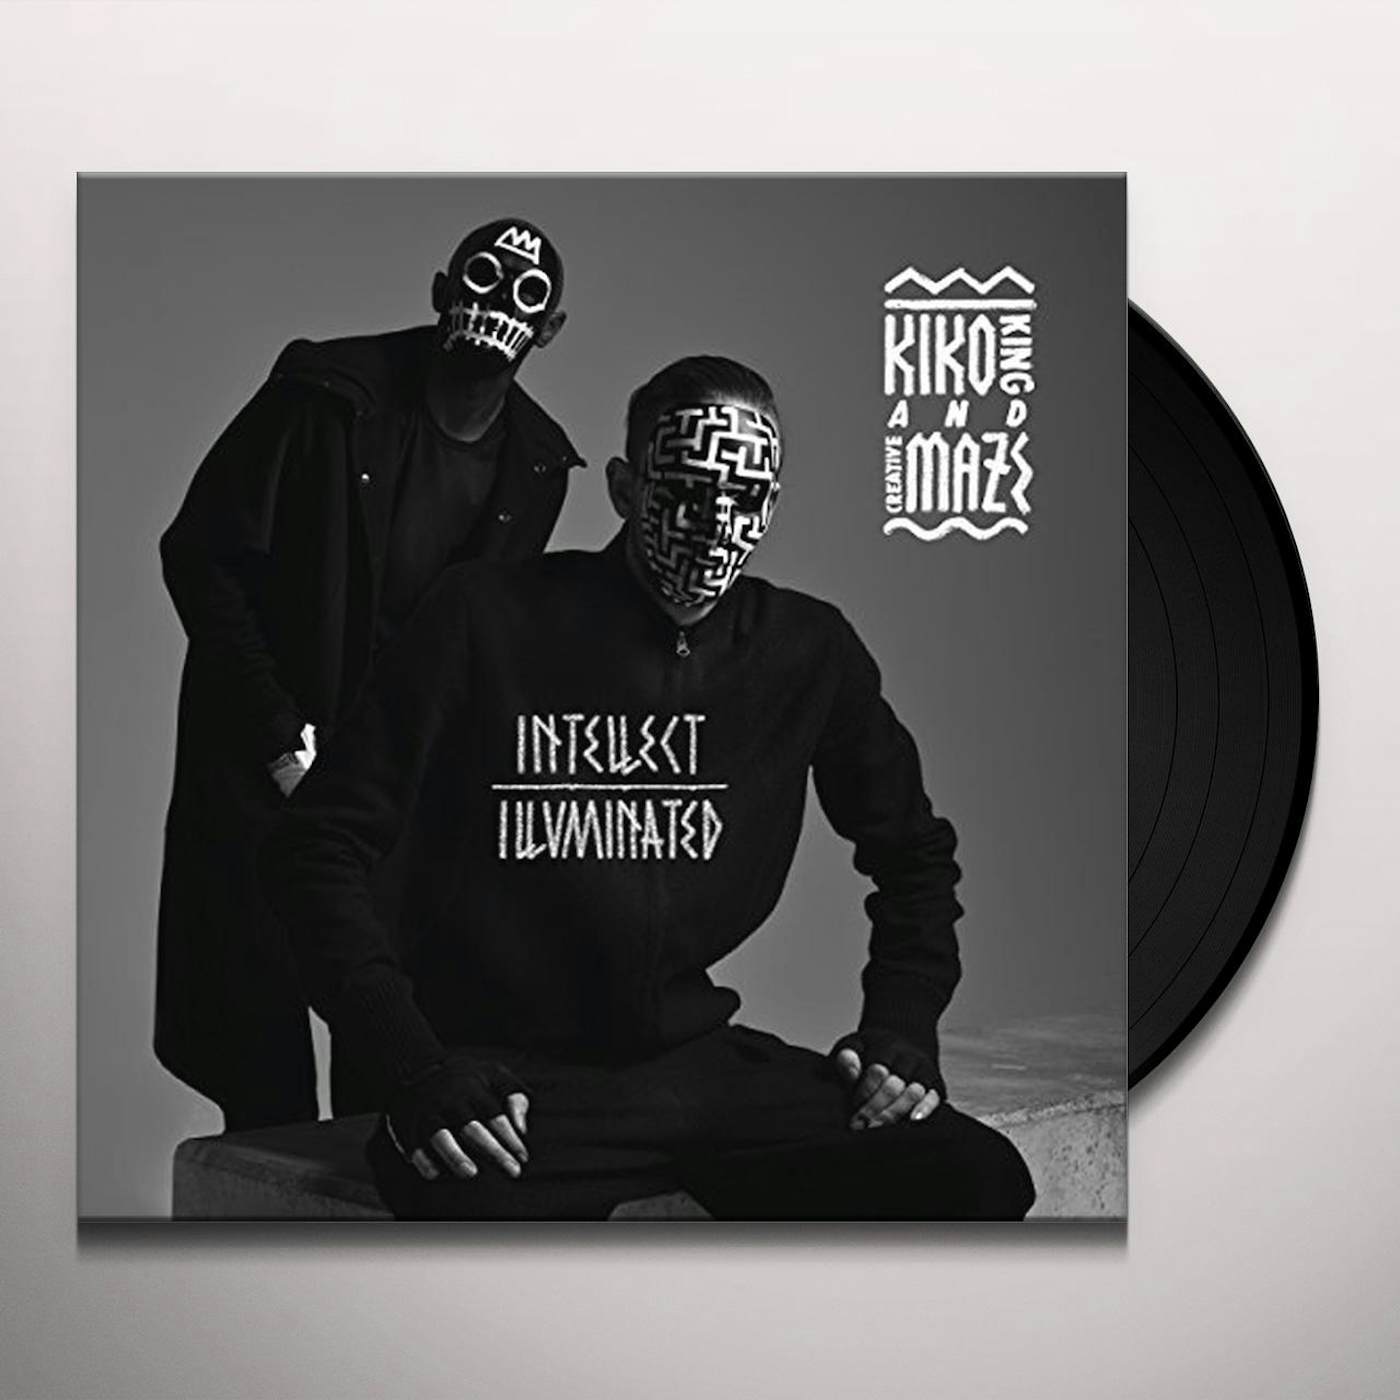 Kiko King & creativemaze INTELLECT ILLUMINATED Vinyl Record - UK Release